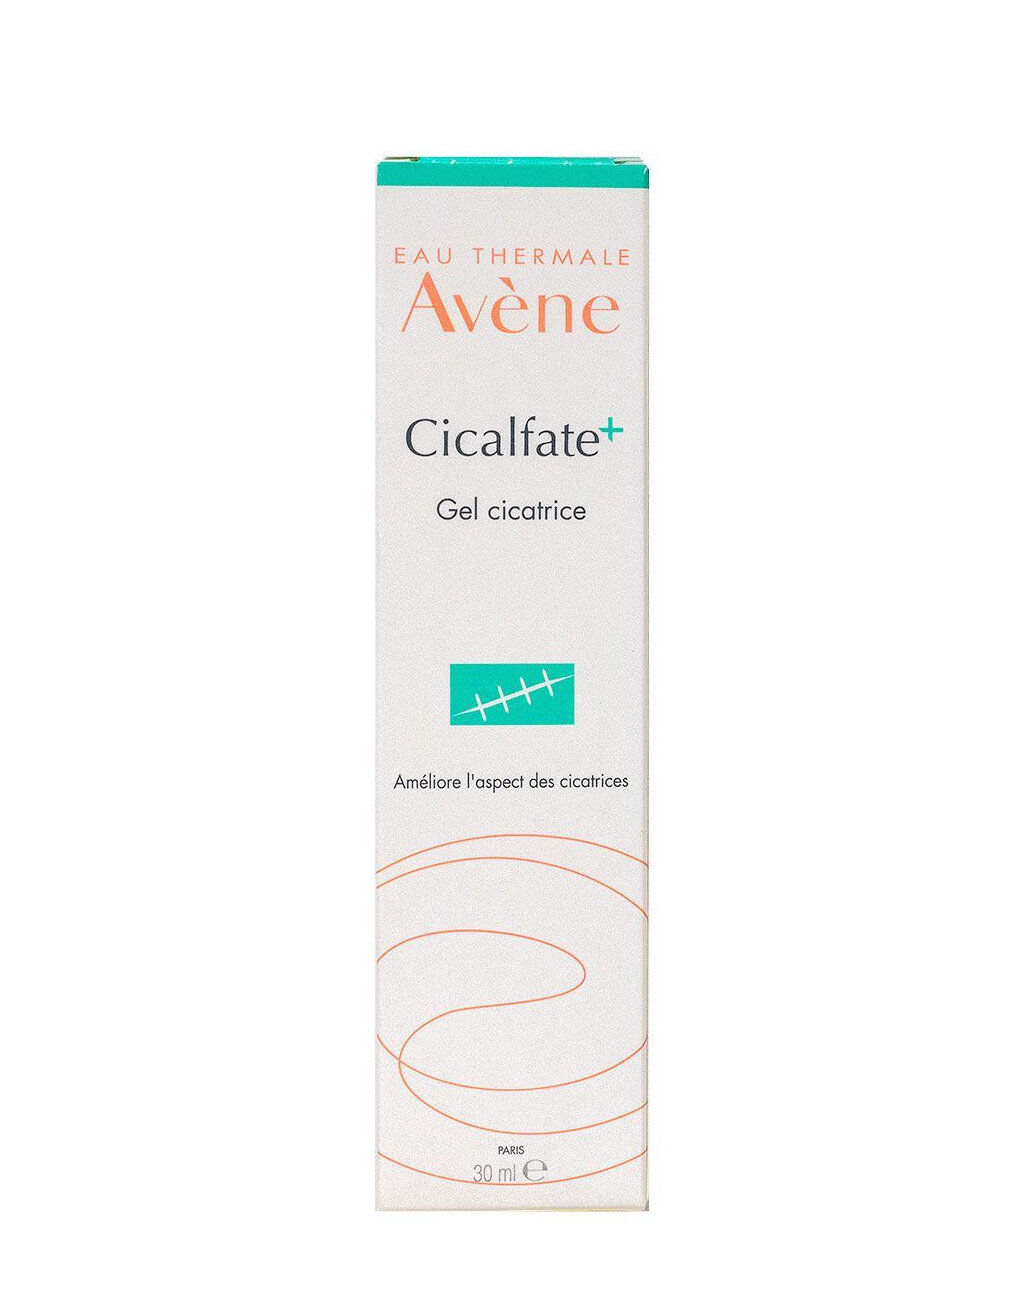 AVÈNE Cicalfate+ Gel Cicatrice 30ml